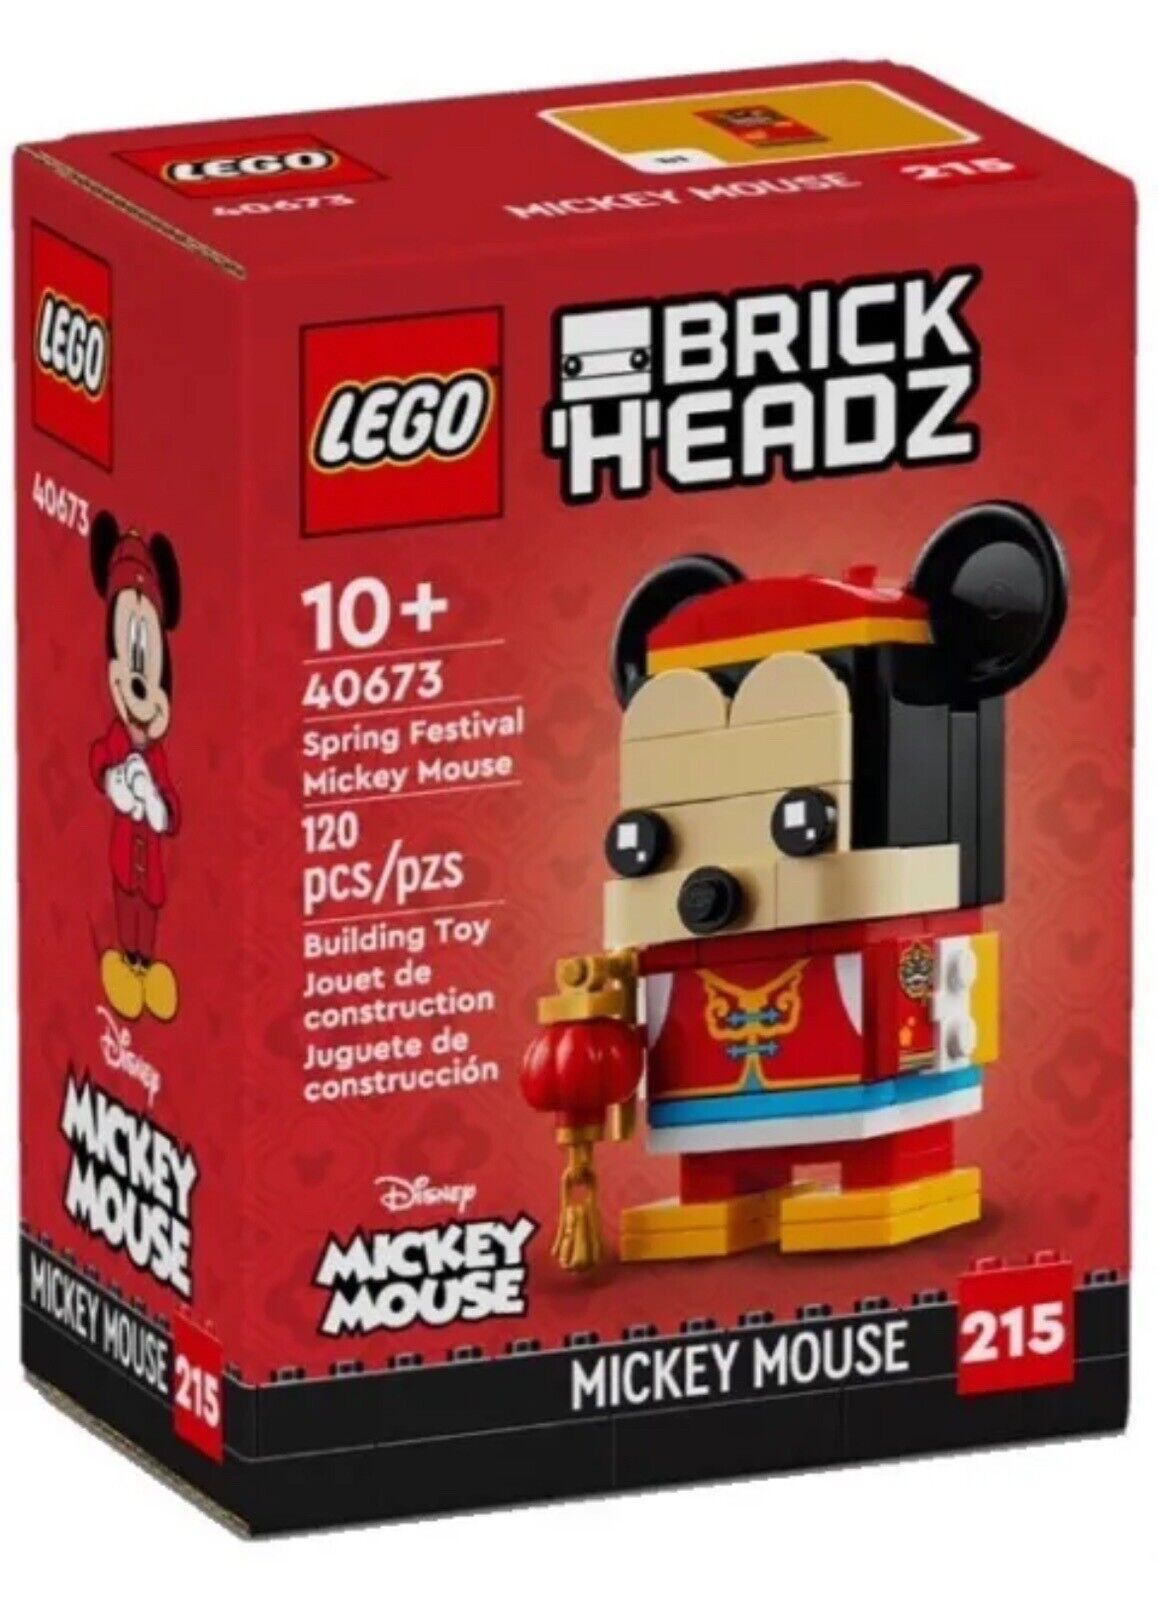 Конструктор LEGO BrickHeadz Весенний фестиваль Микки Мауса 40673, 120 дет. конструктор lego brickheadz аквамен 41600